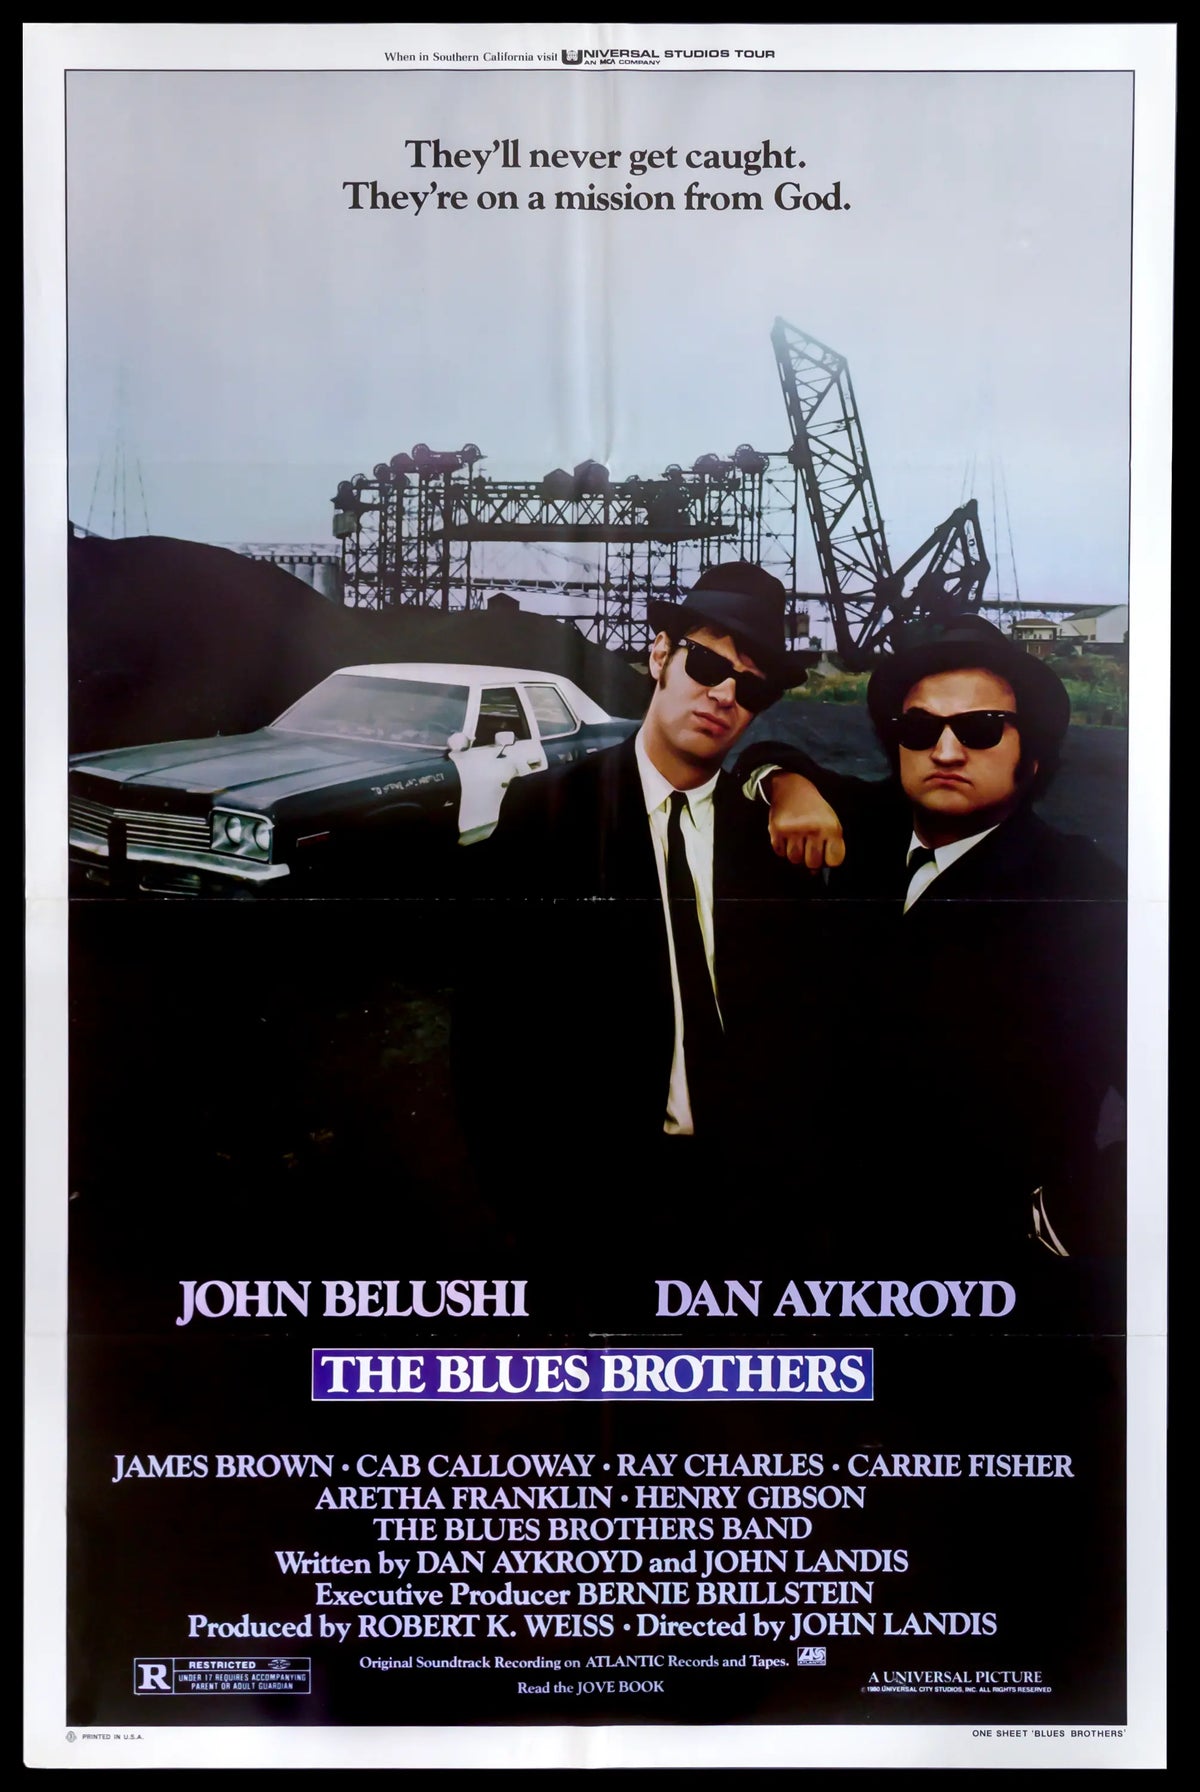 Blues Brothers (1980) original movie poster for sale at Original Film Art